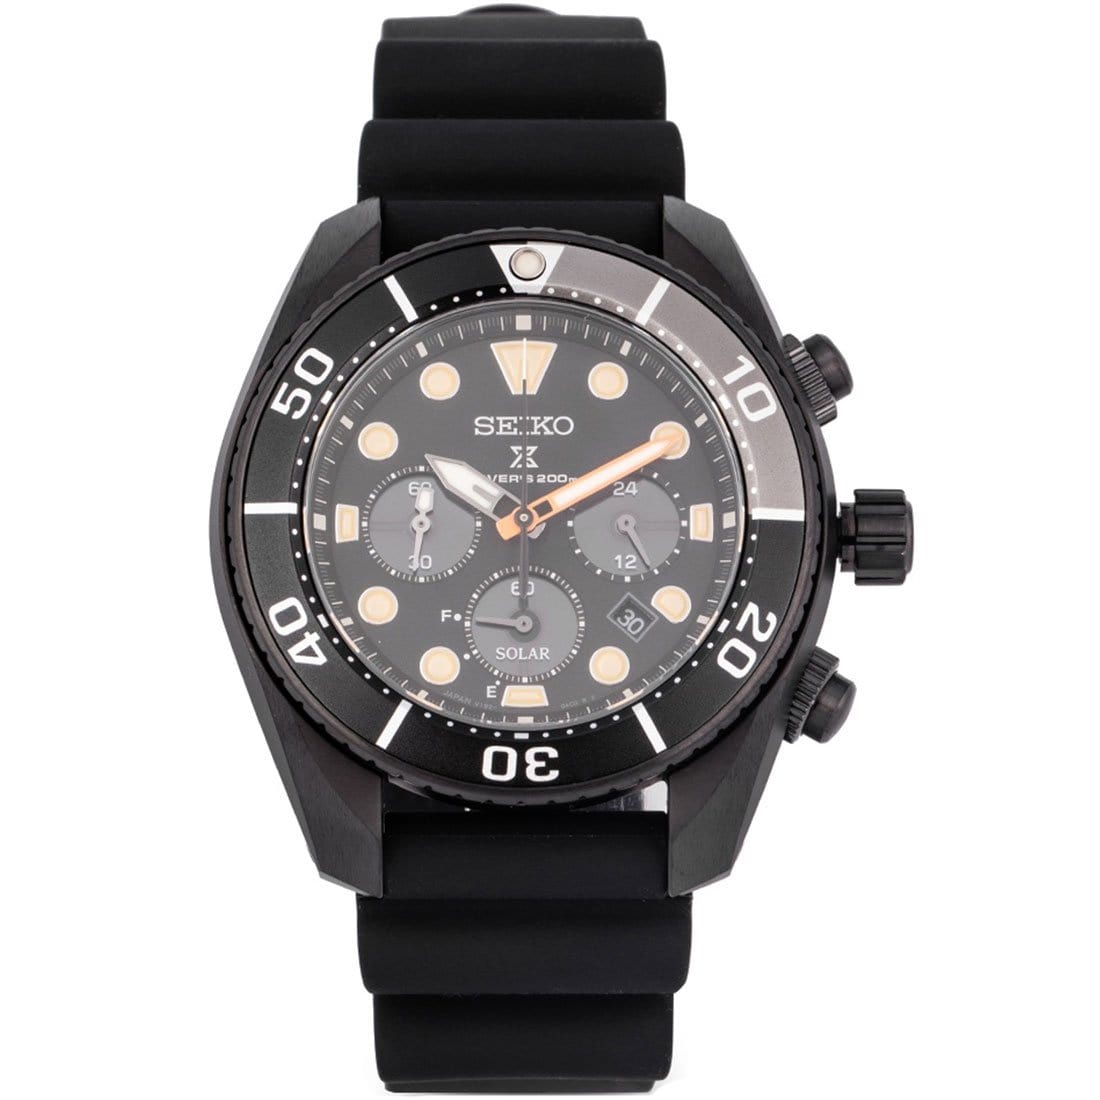 SBDL065 Seiko Prospex Black Series SUMO Solar Limited Edition JDM Watch